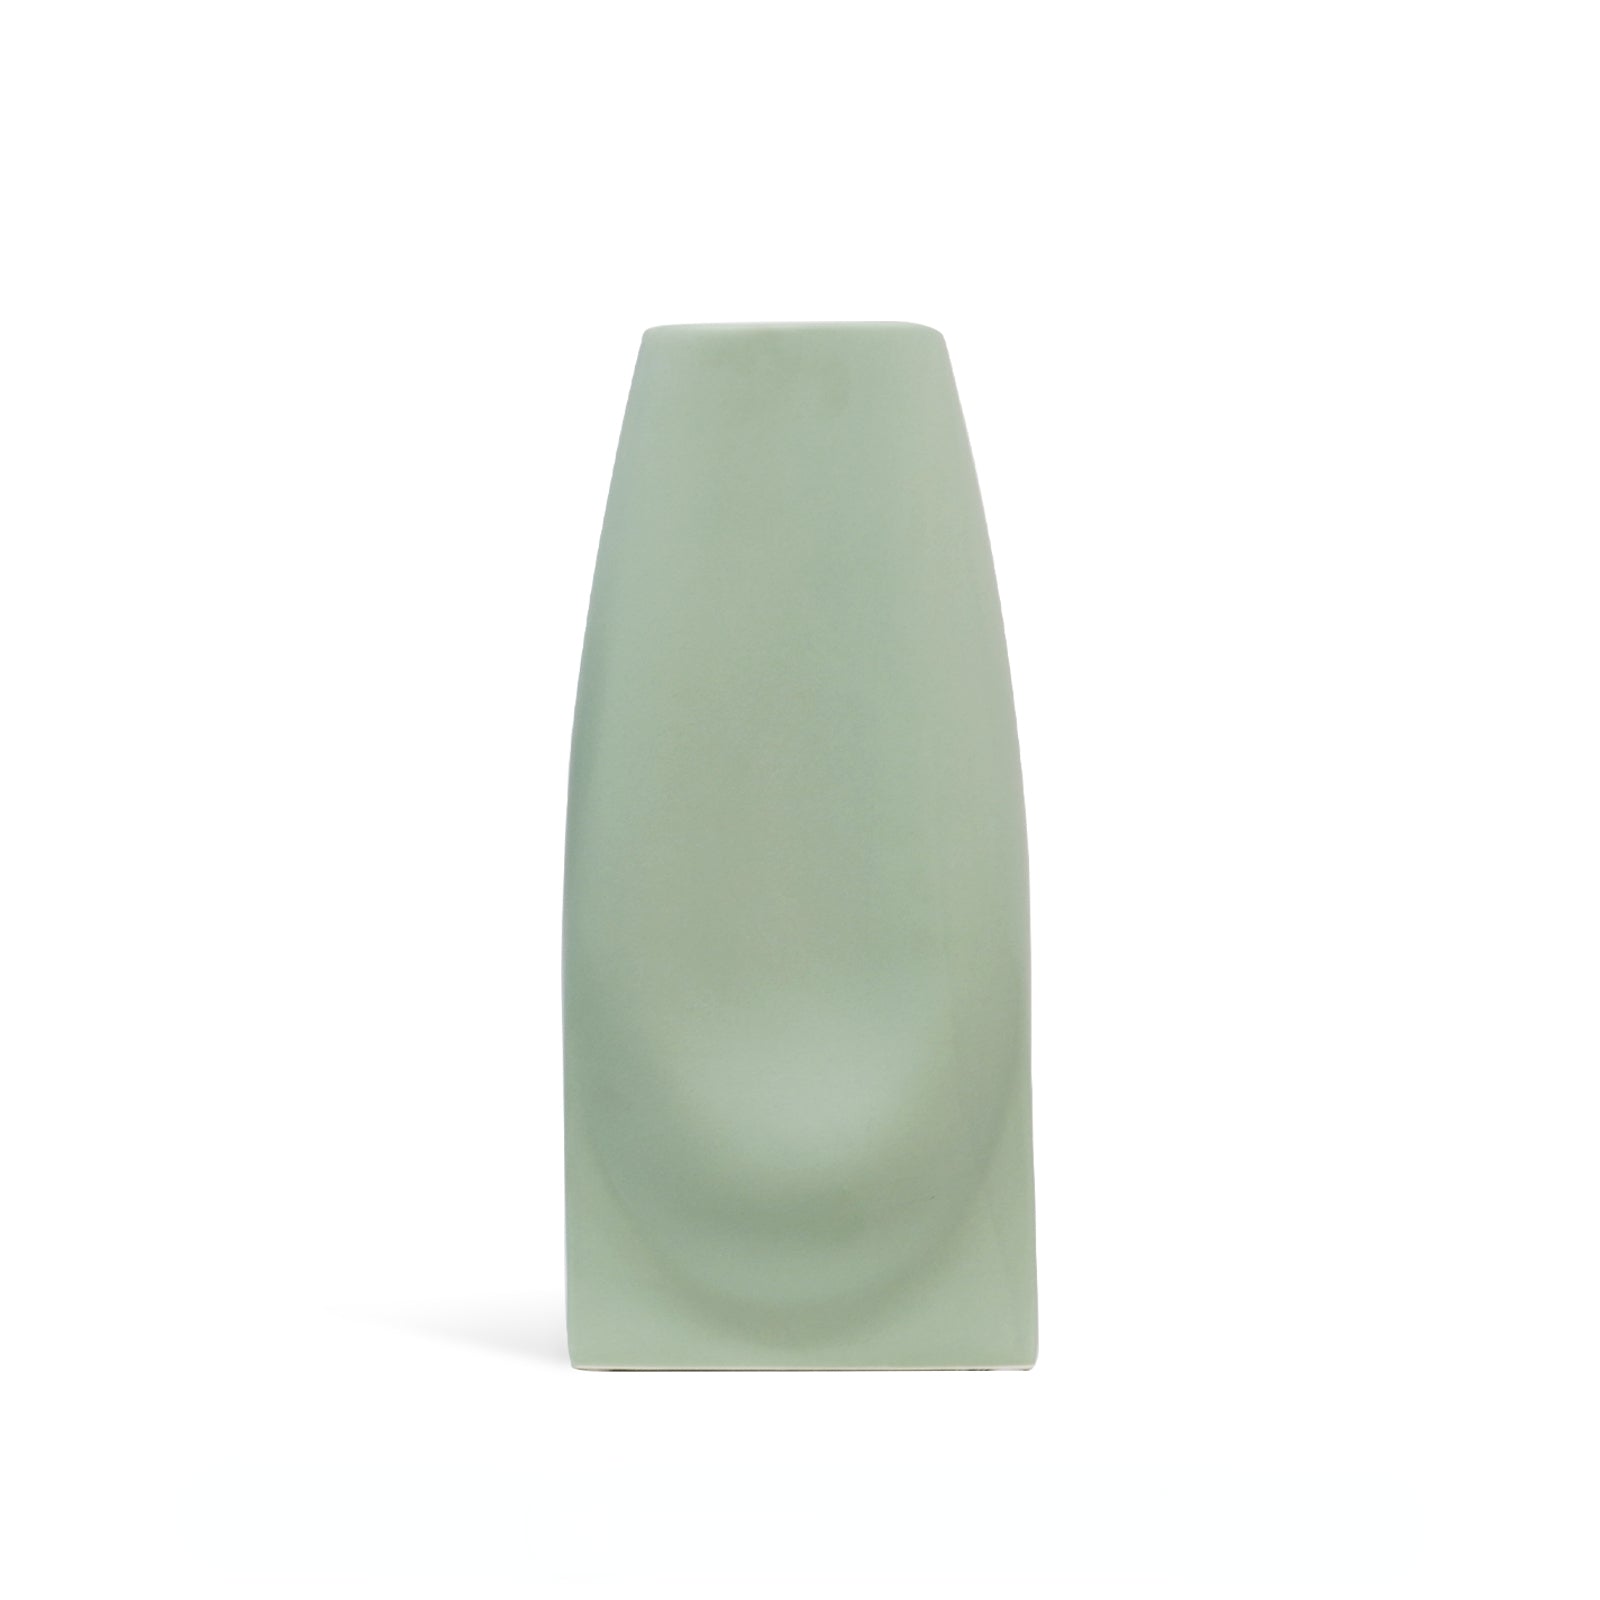 Rockton Ceramic Table Vase